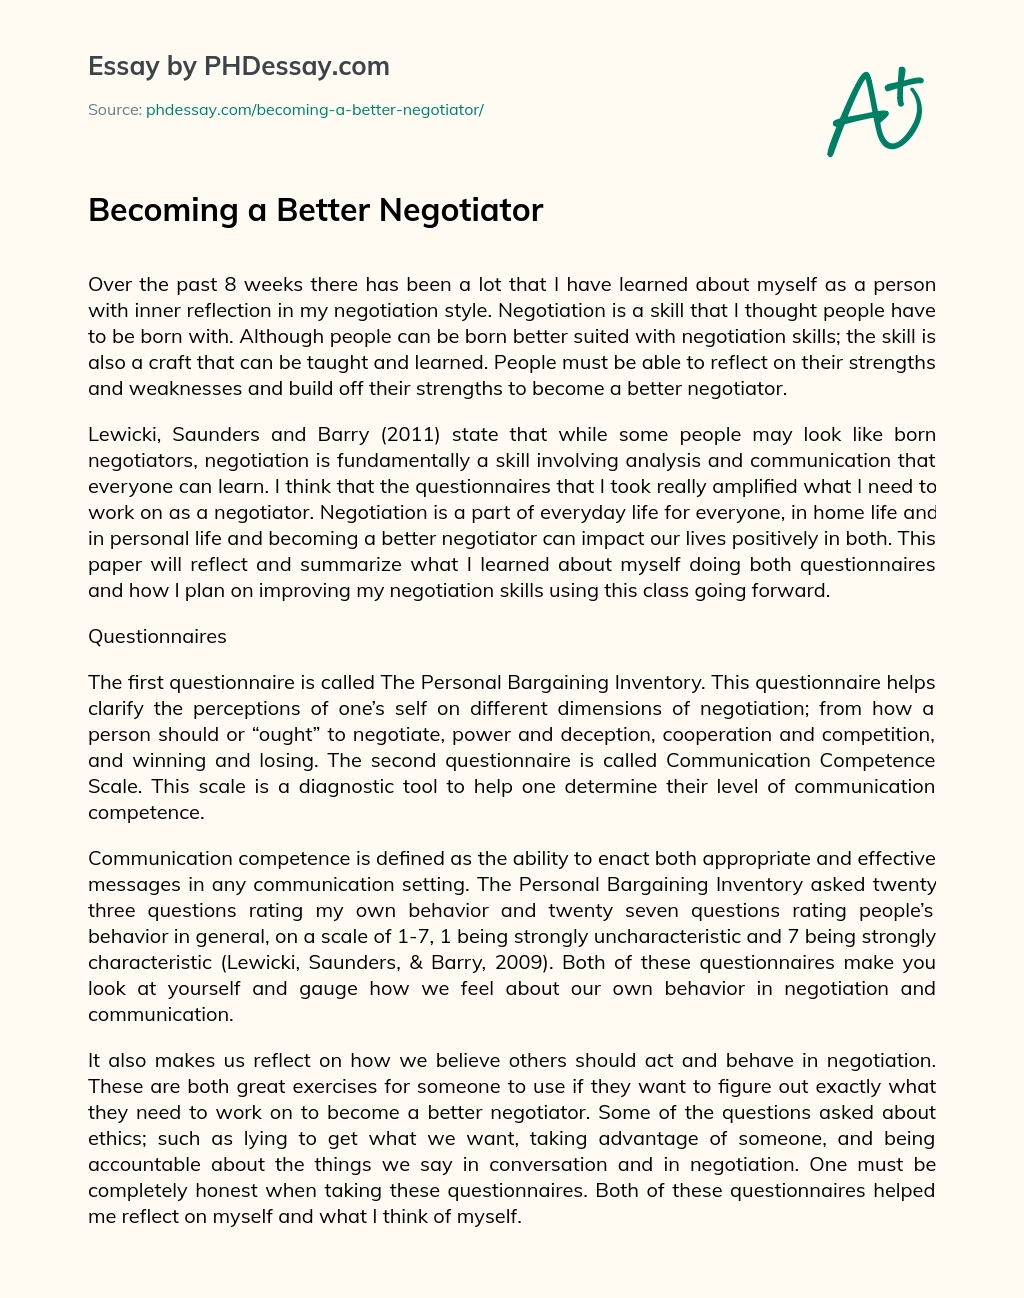 Becoming a Better Negotiator essay